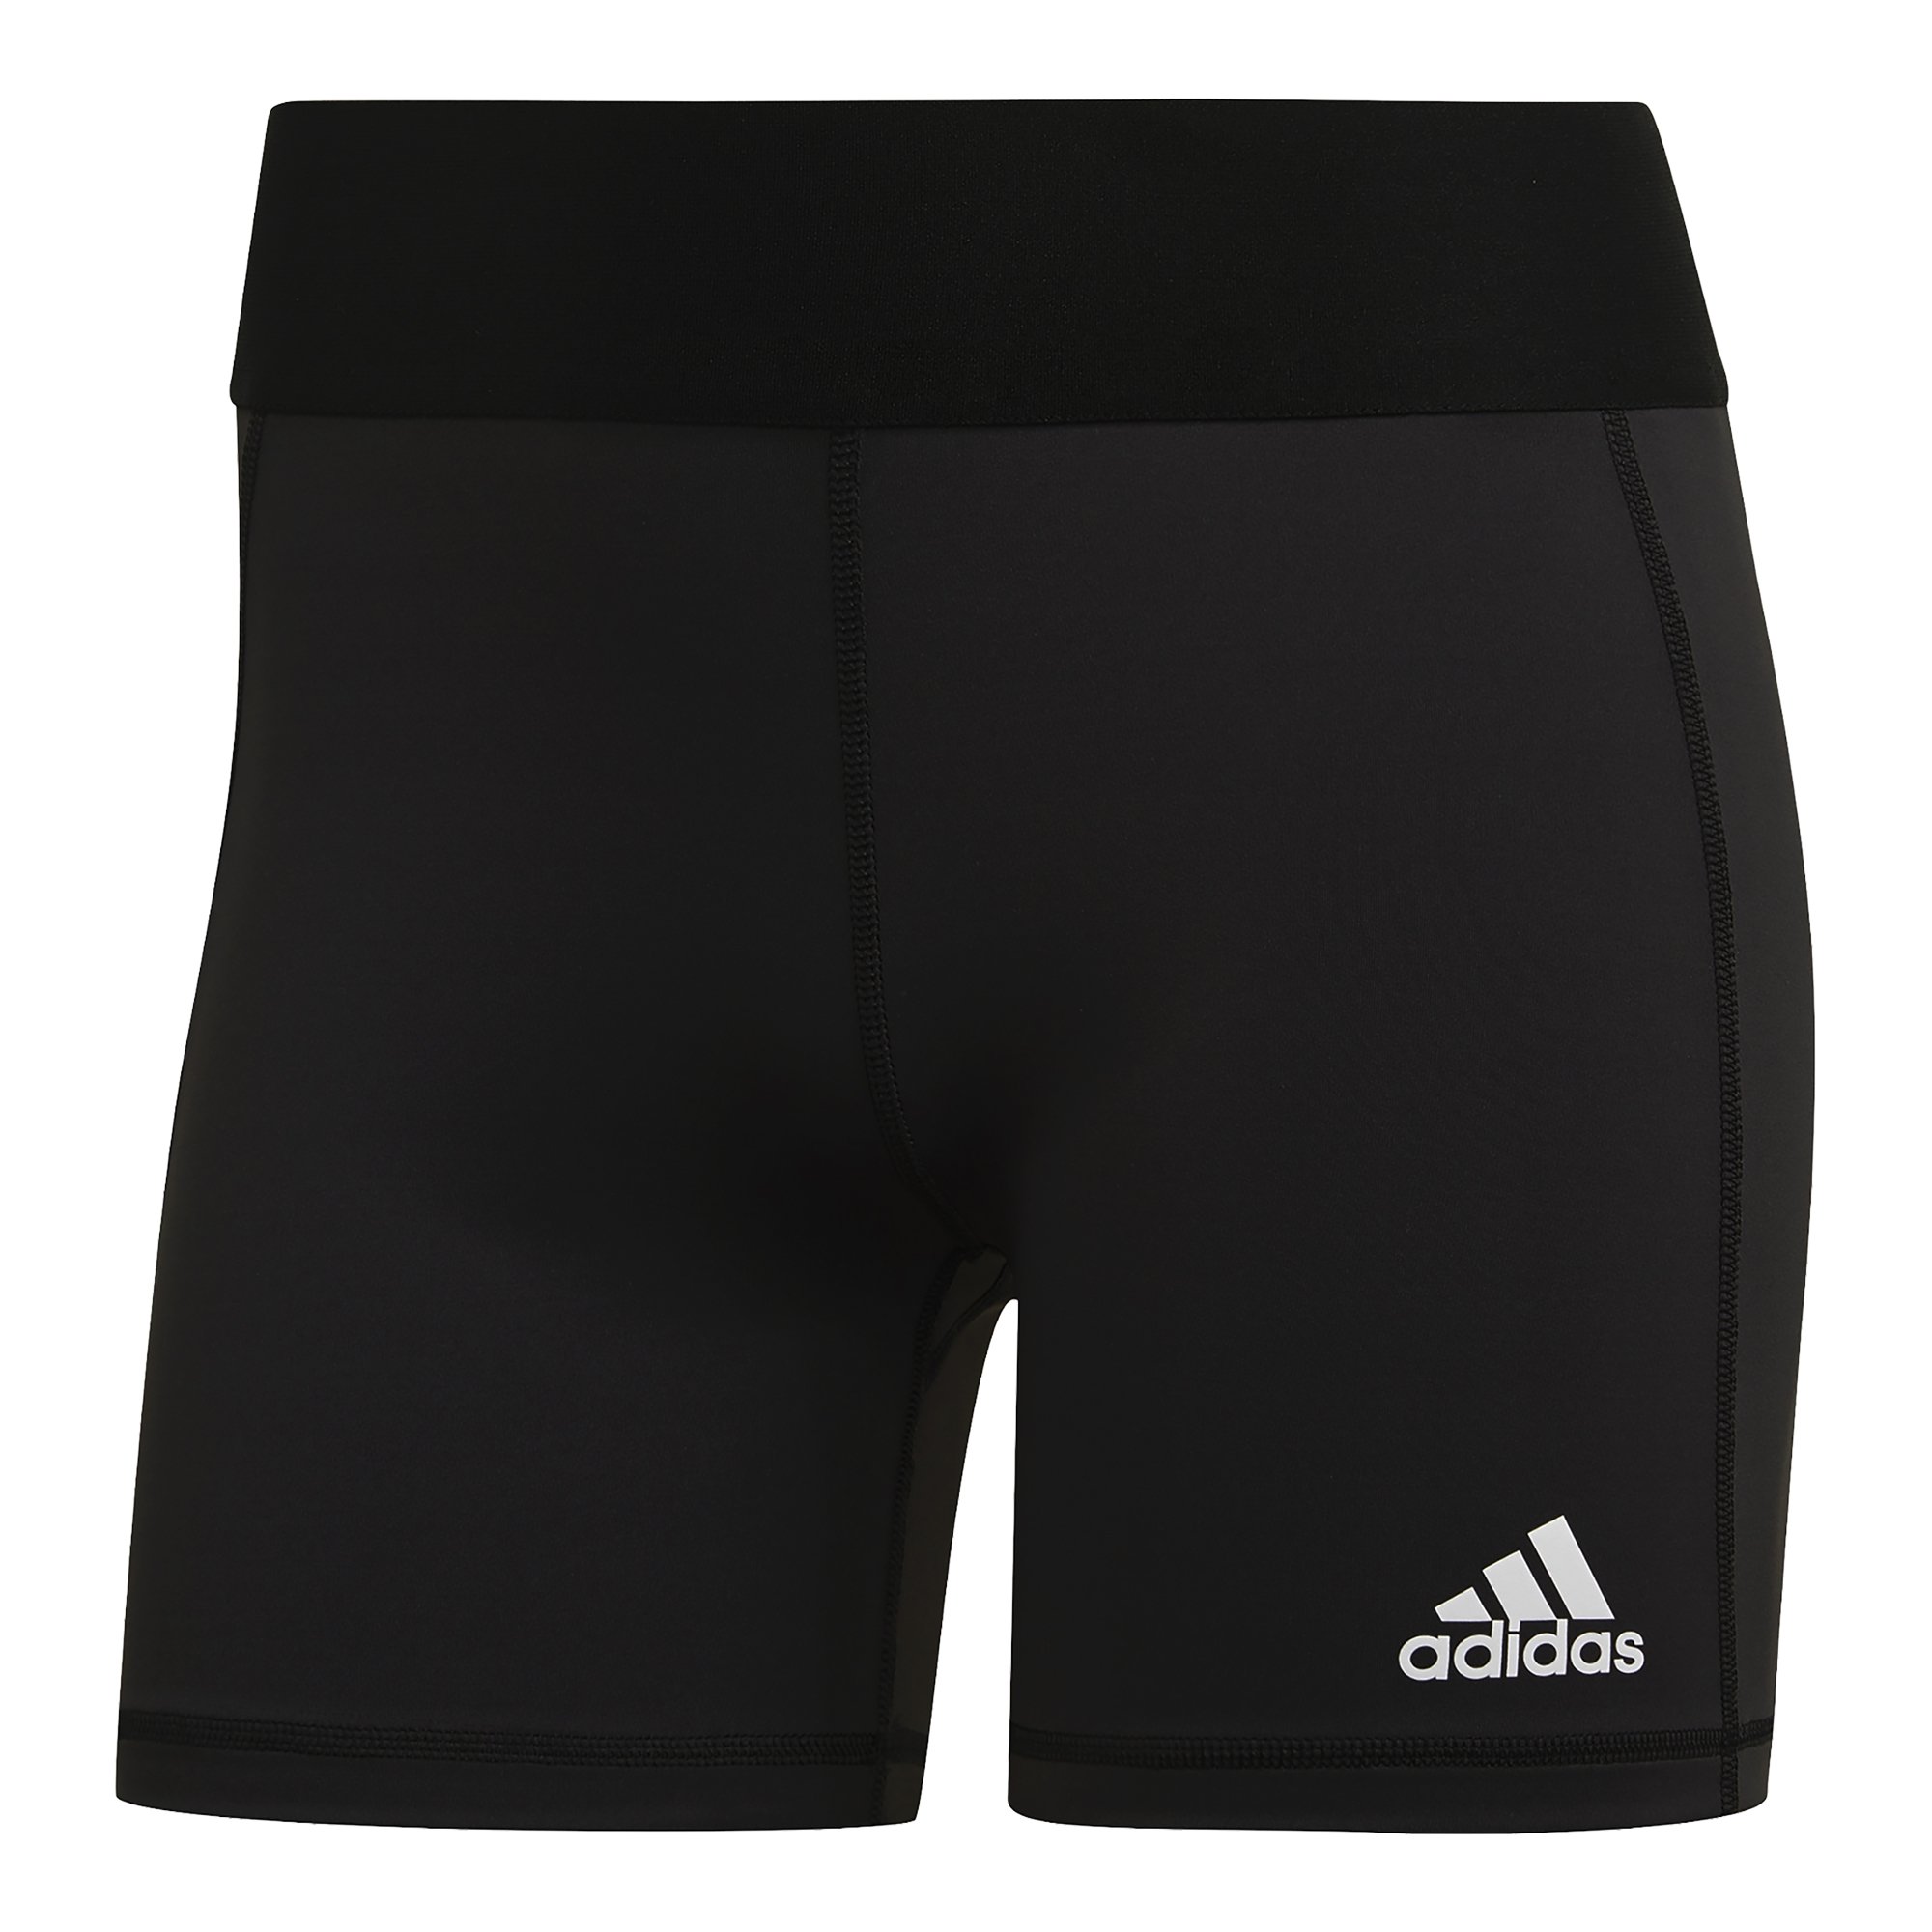 Adidas Techfit Volleyball Shorts